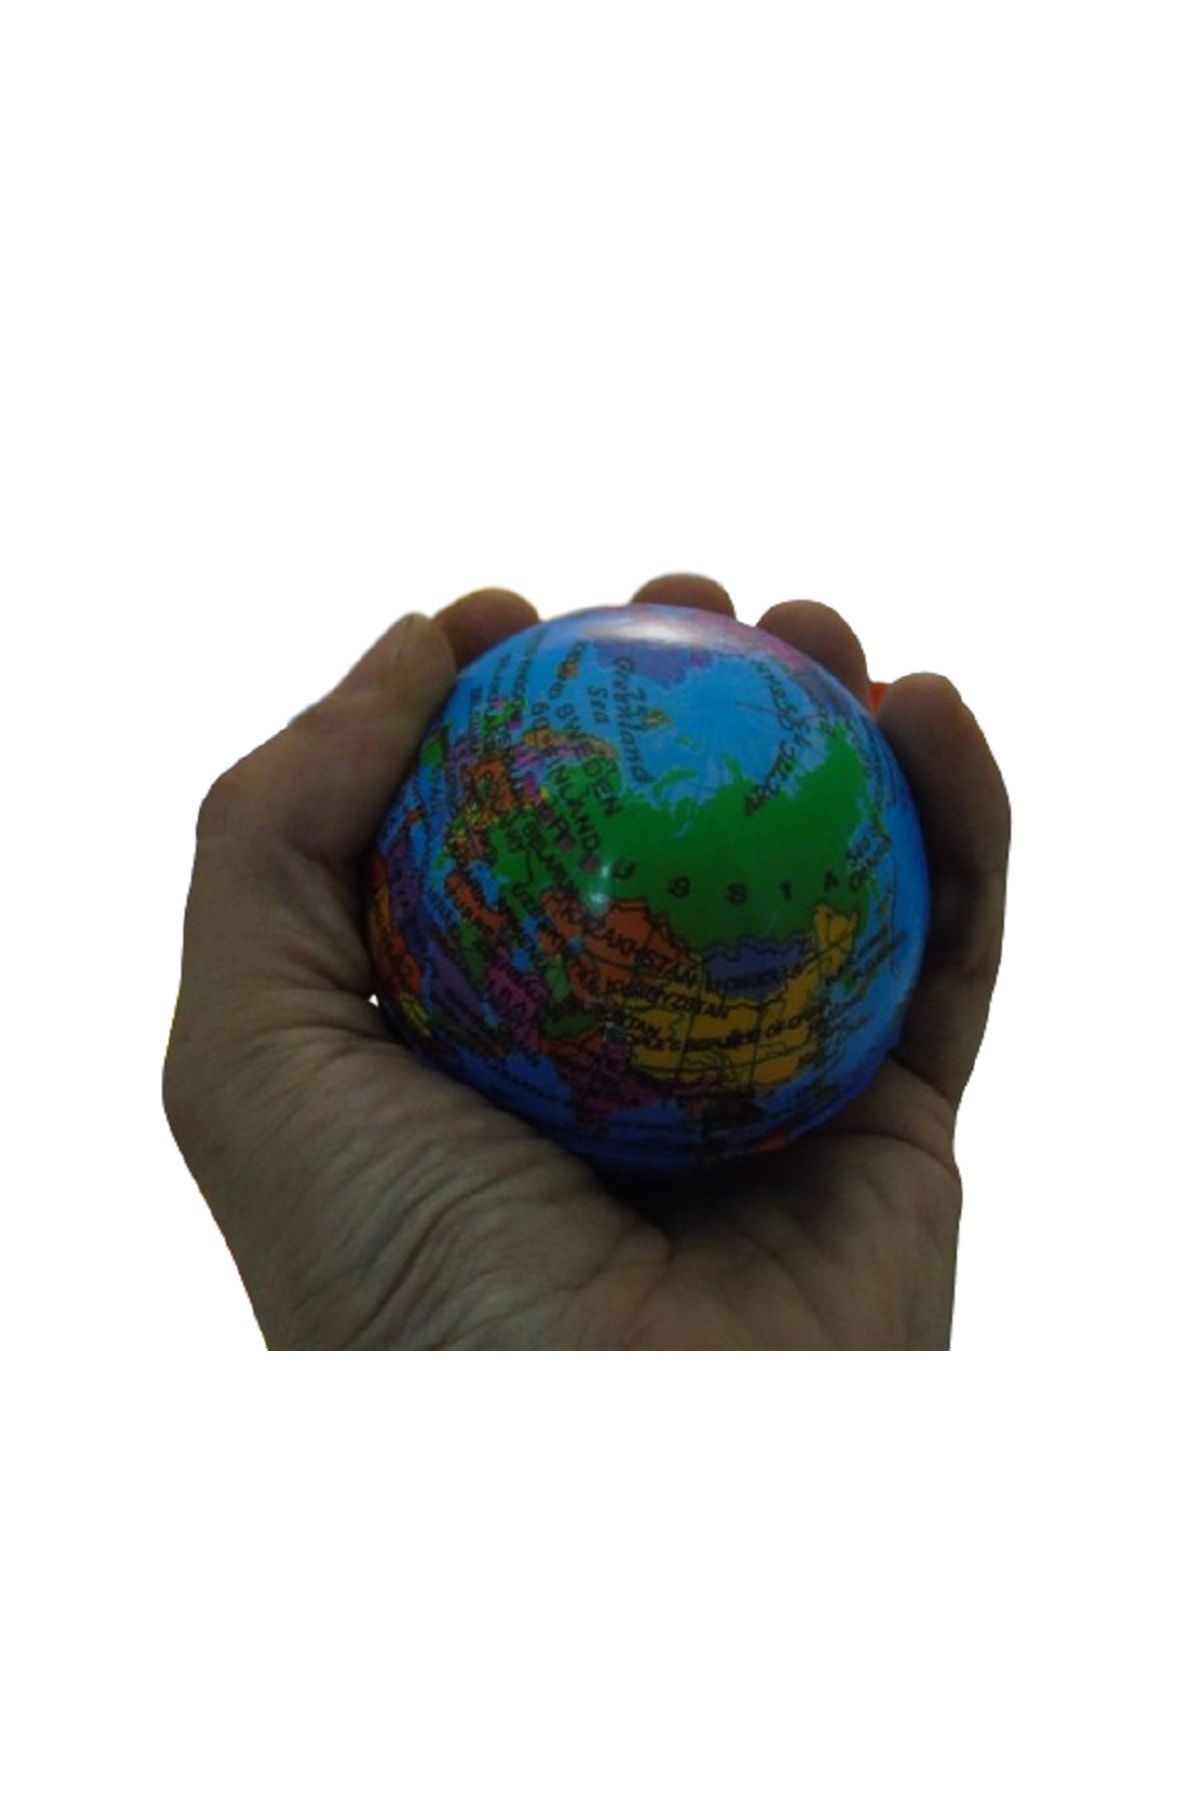 ÇAKABEY El & Parmak Çalıştırma Topu /Stres Topu / Avuç Topu / Sünger Top / Dünya Top 7,5 cm Yumuşak Top